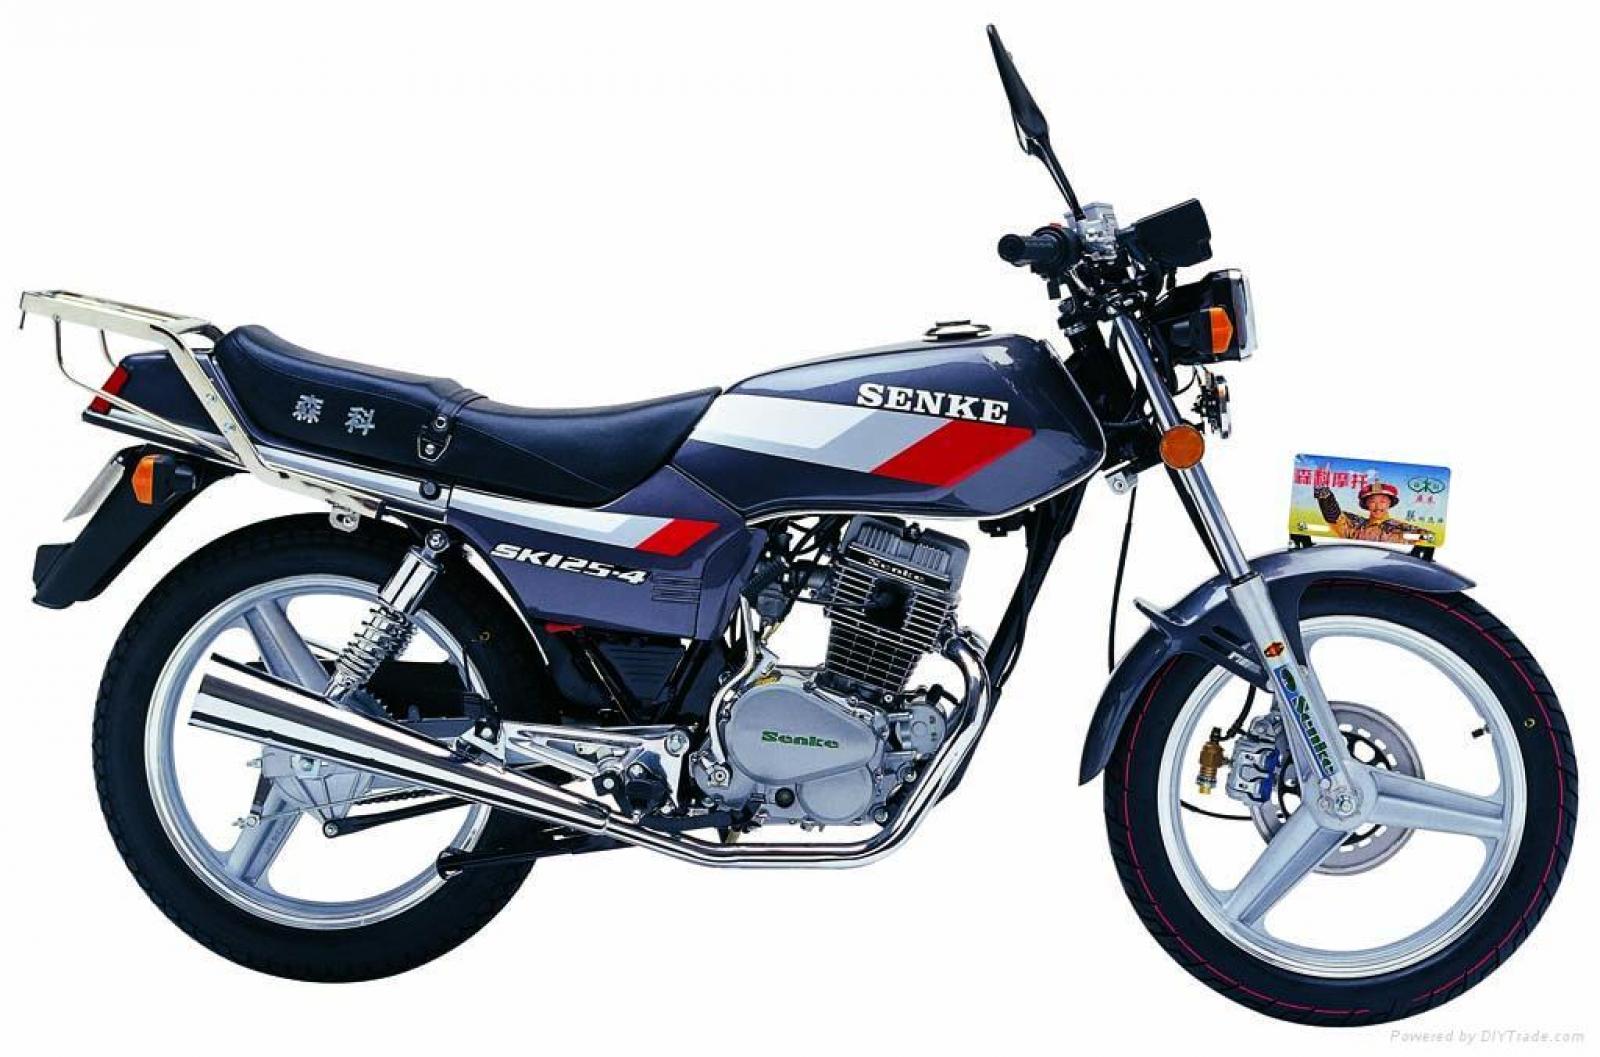 Мотоцикл Senke sk125